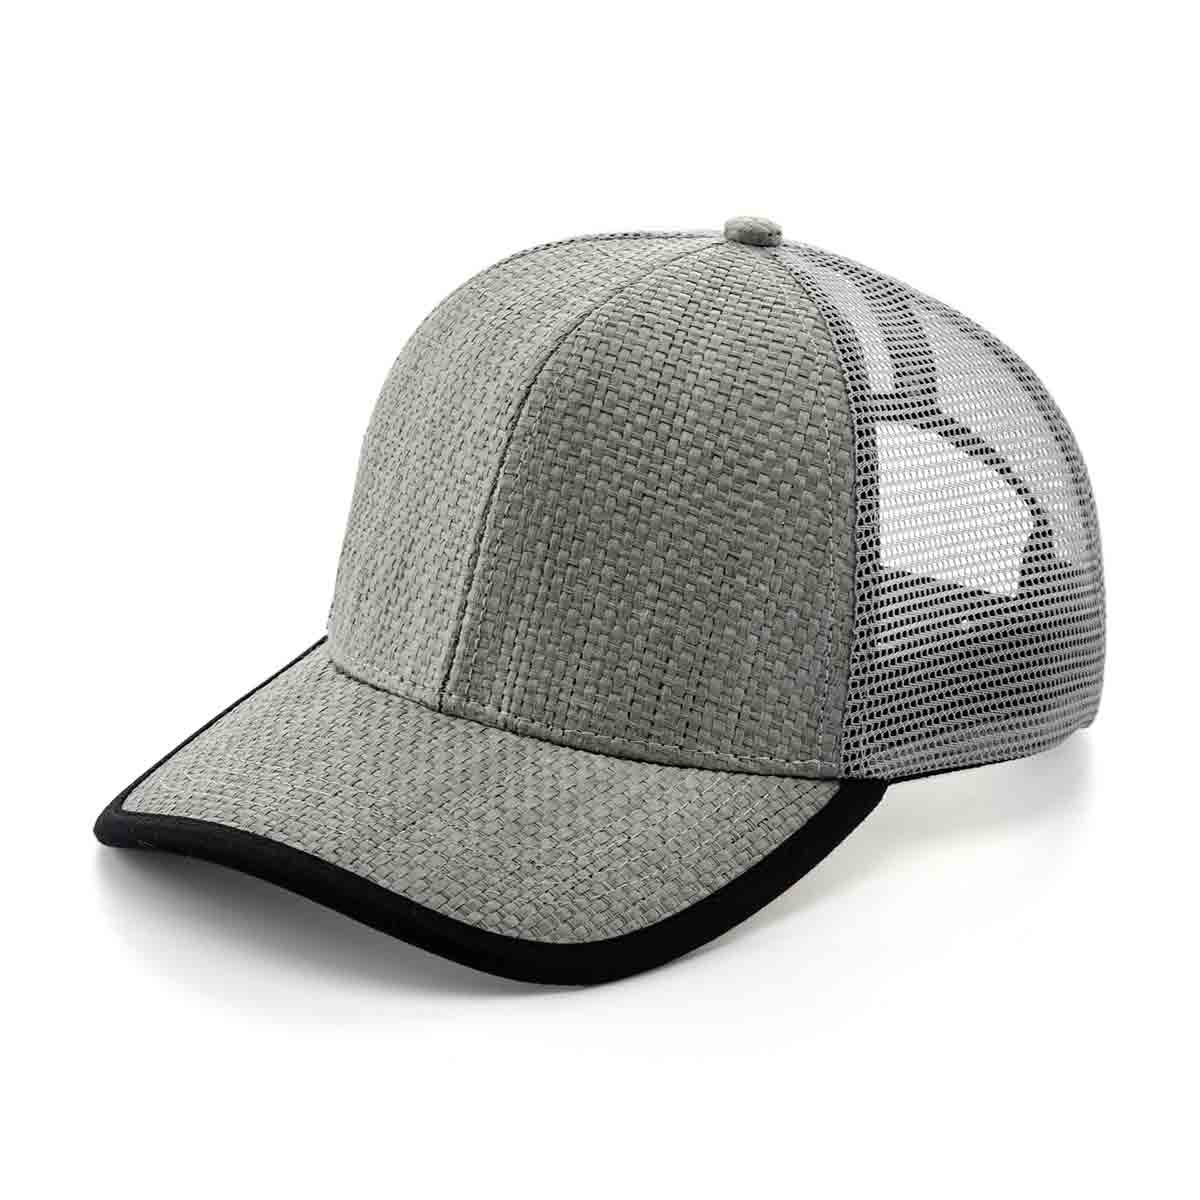 Aung Crown gray-black trucker hat trendy fashion SFG-210428-5